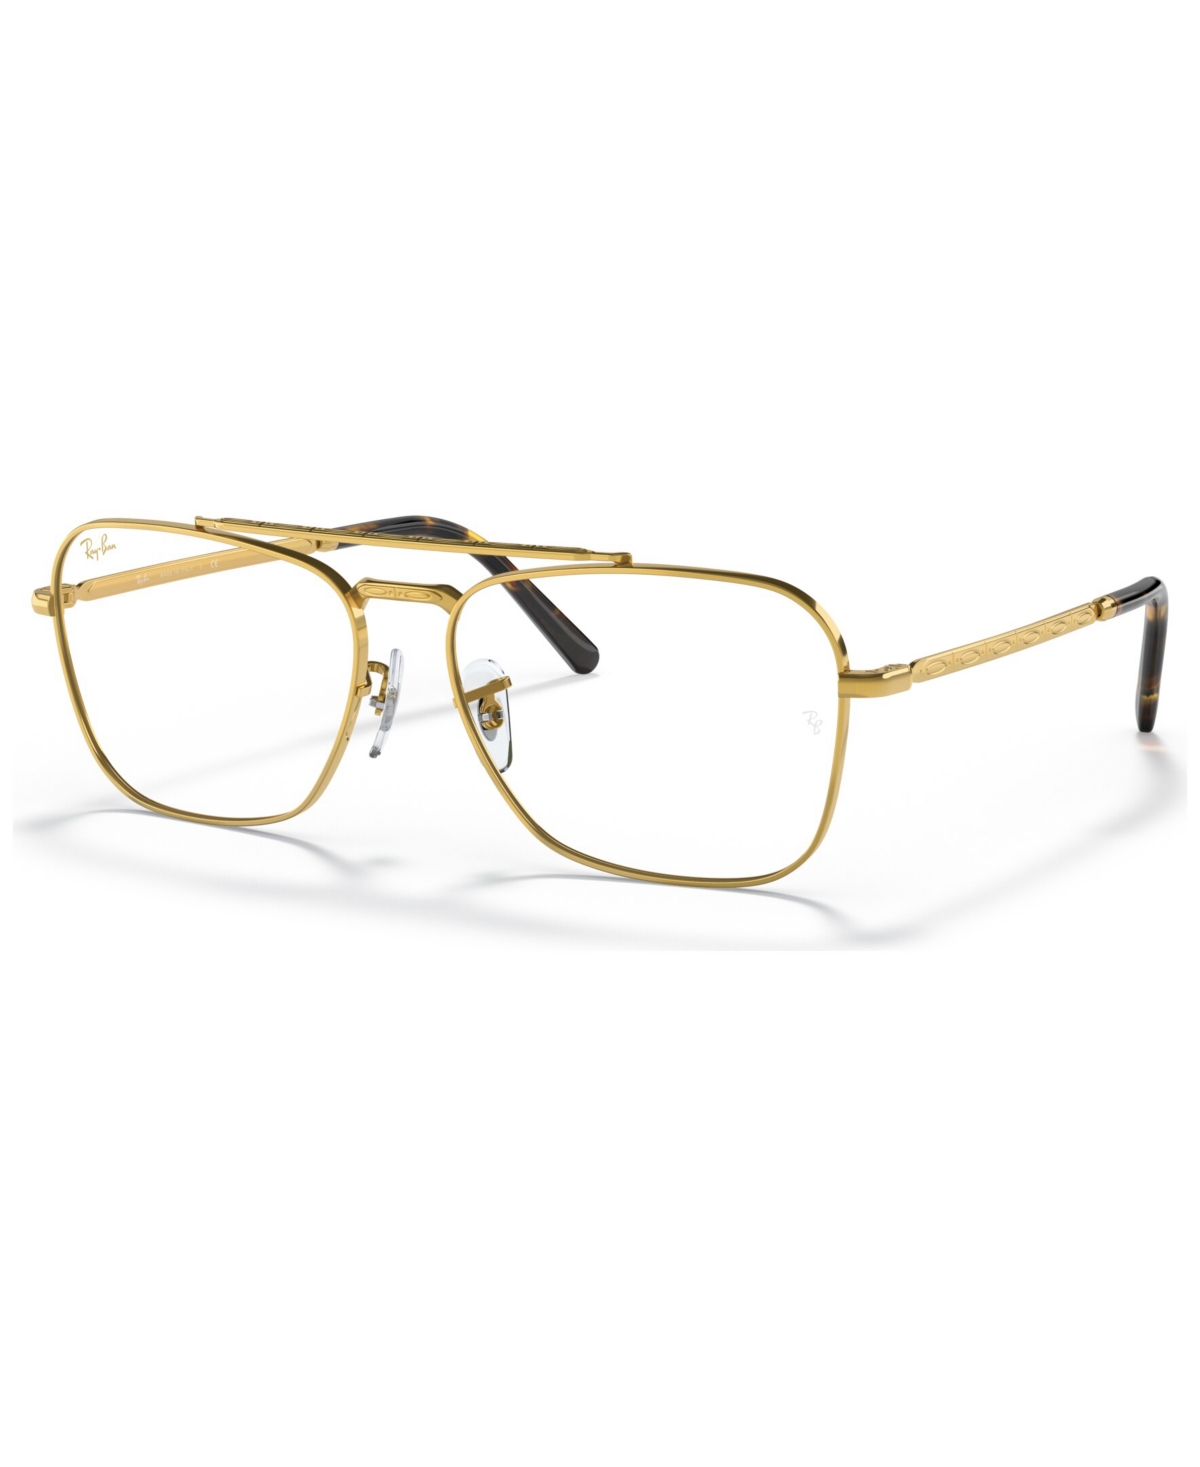 Unisex Square Eyeglasses, RX3636V58-o - Legend Gold Tone